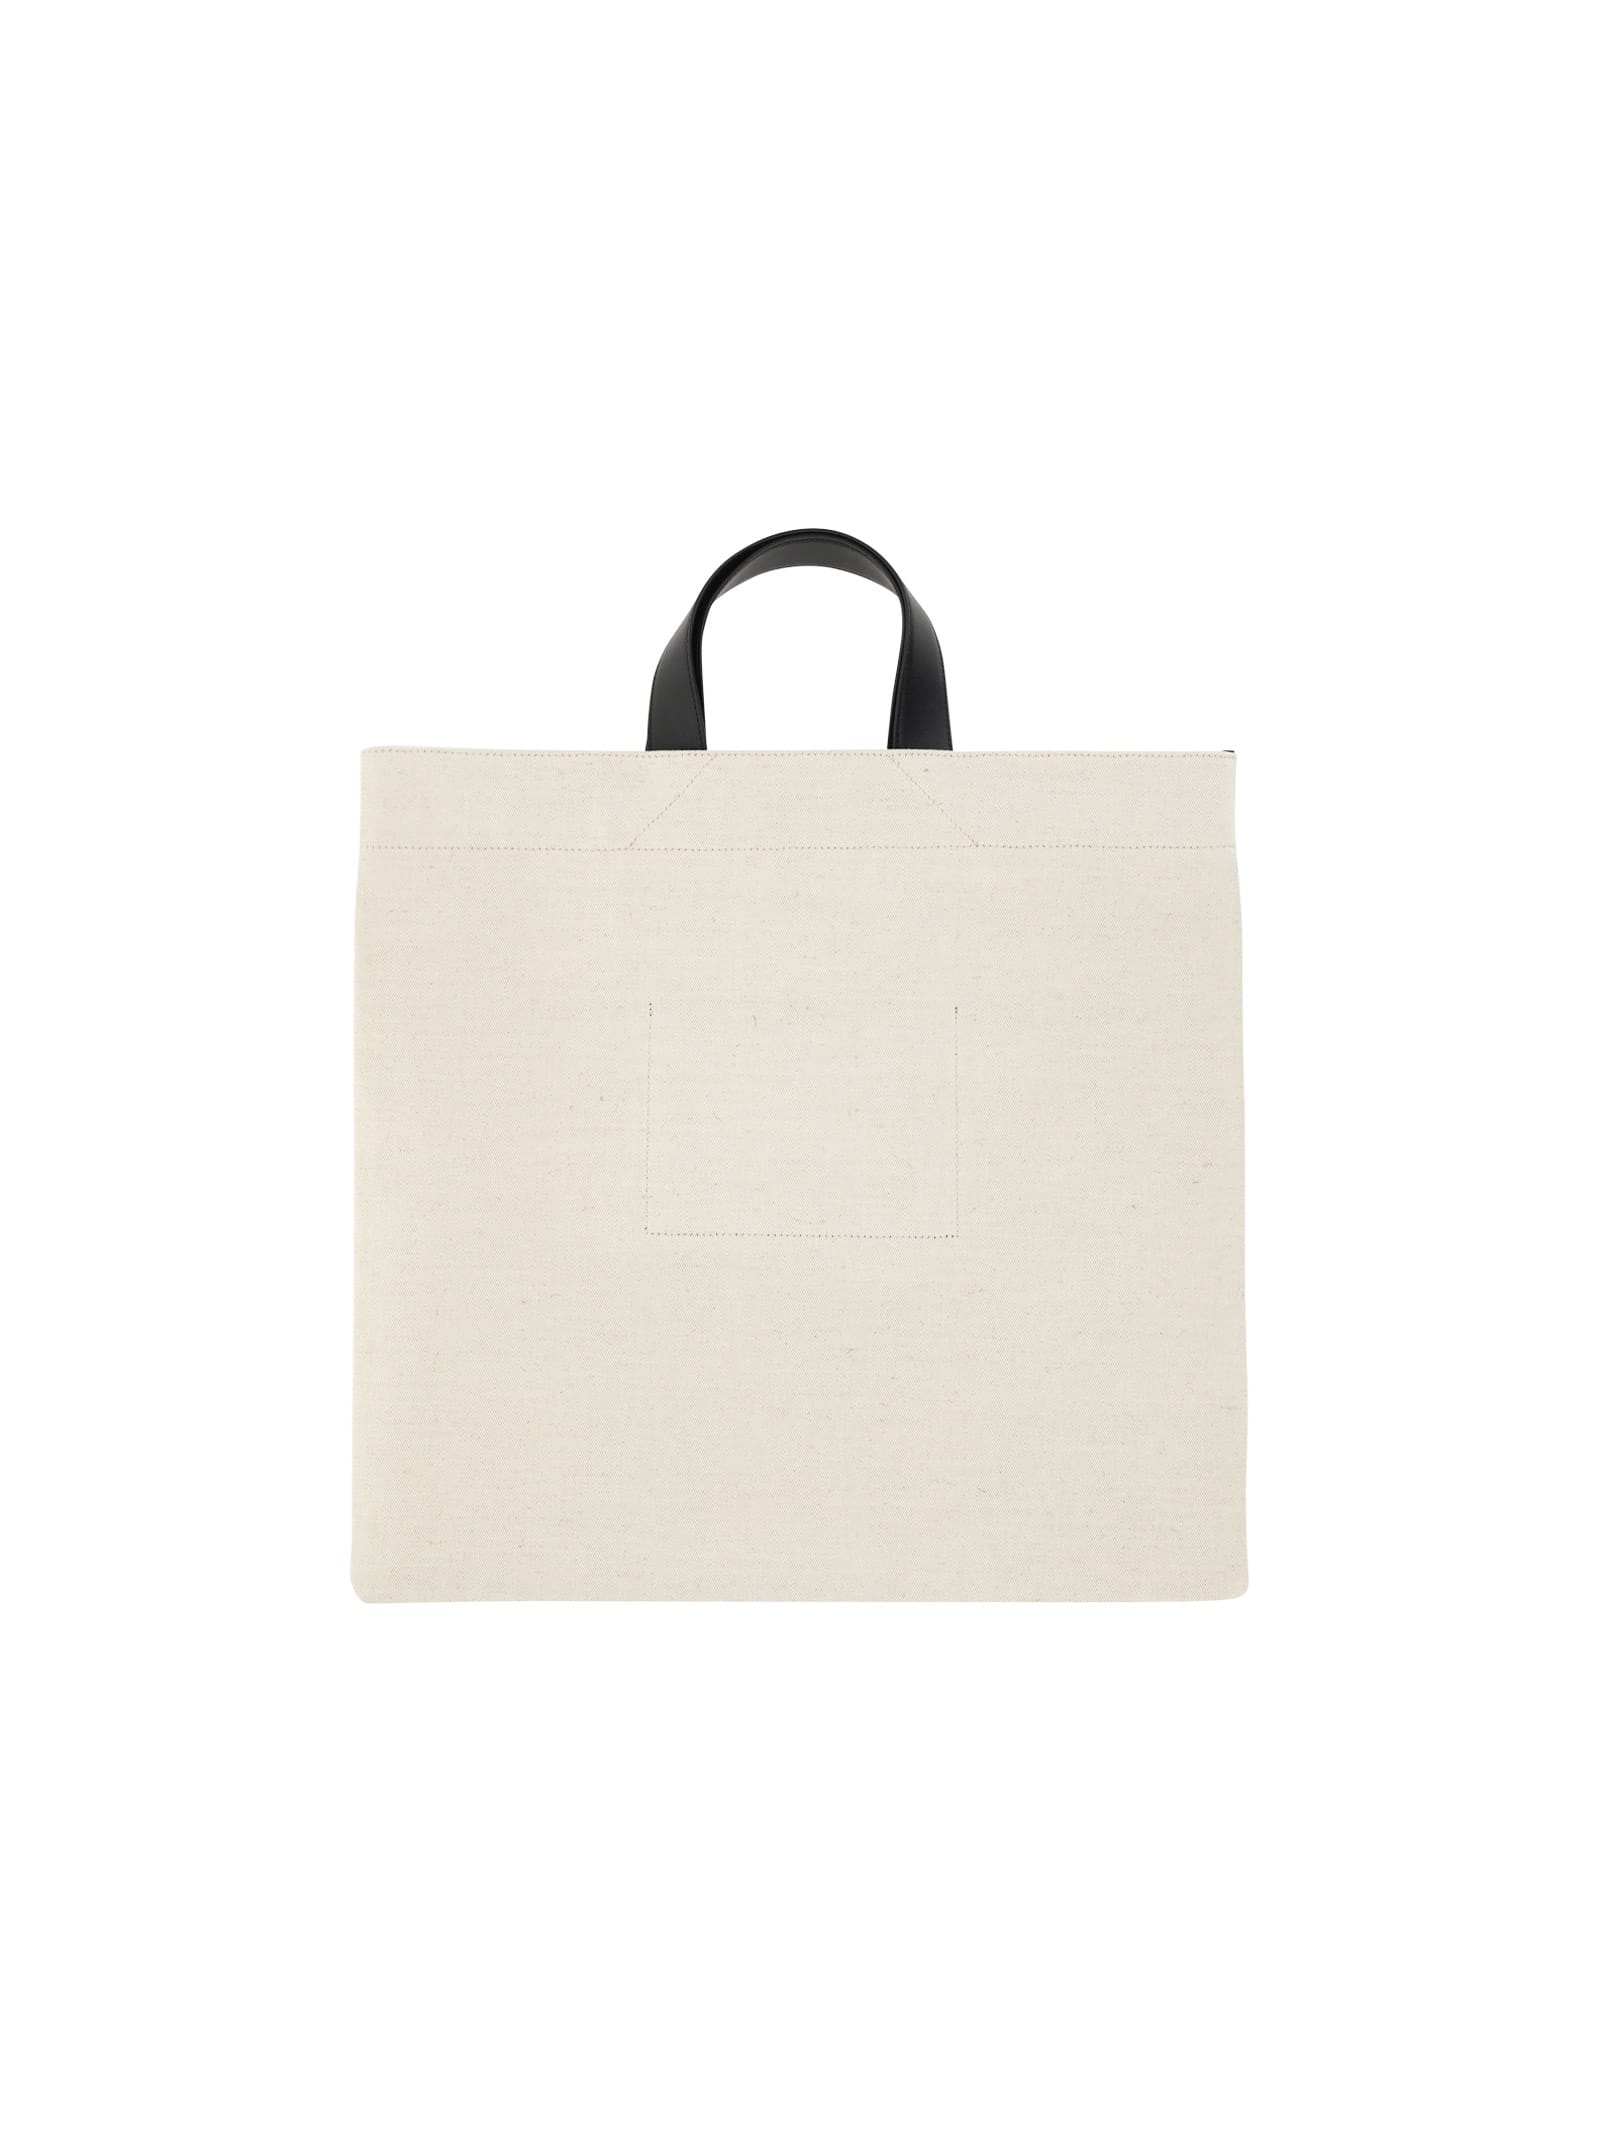 Shop Jil Sander Shopping Bag In White